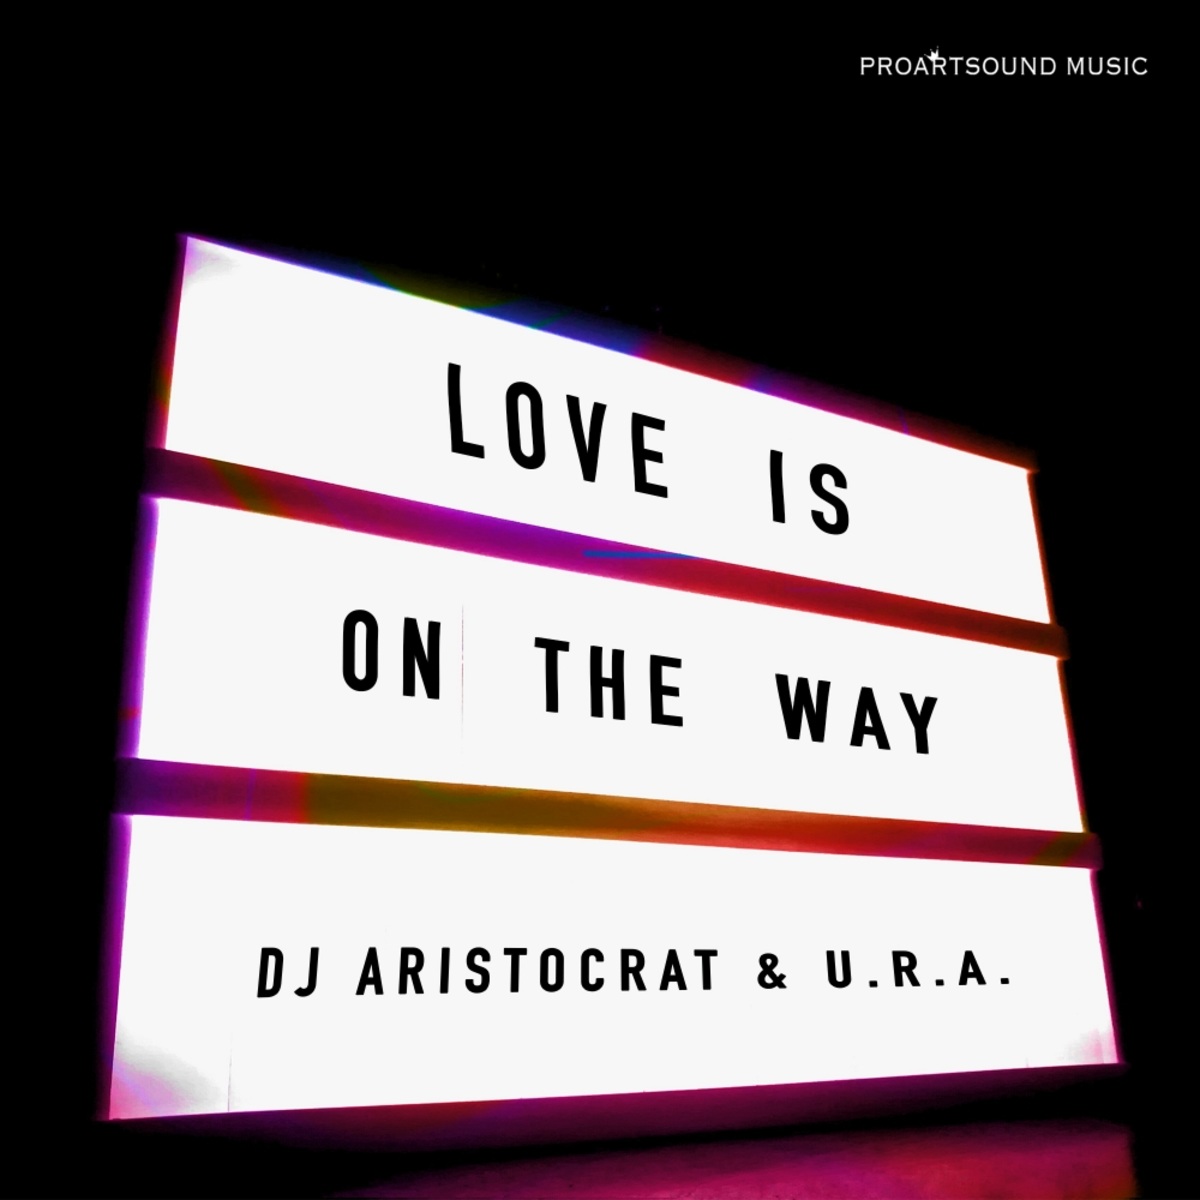 Dj Aristocrat & U.R.A. - Love Is On The Way / Proartsound Music